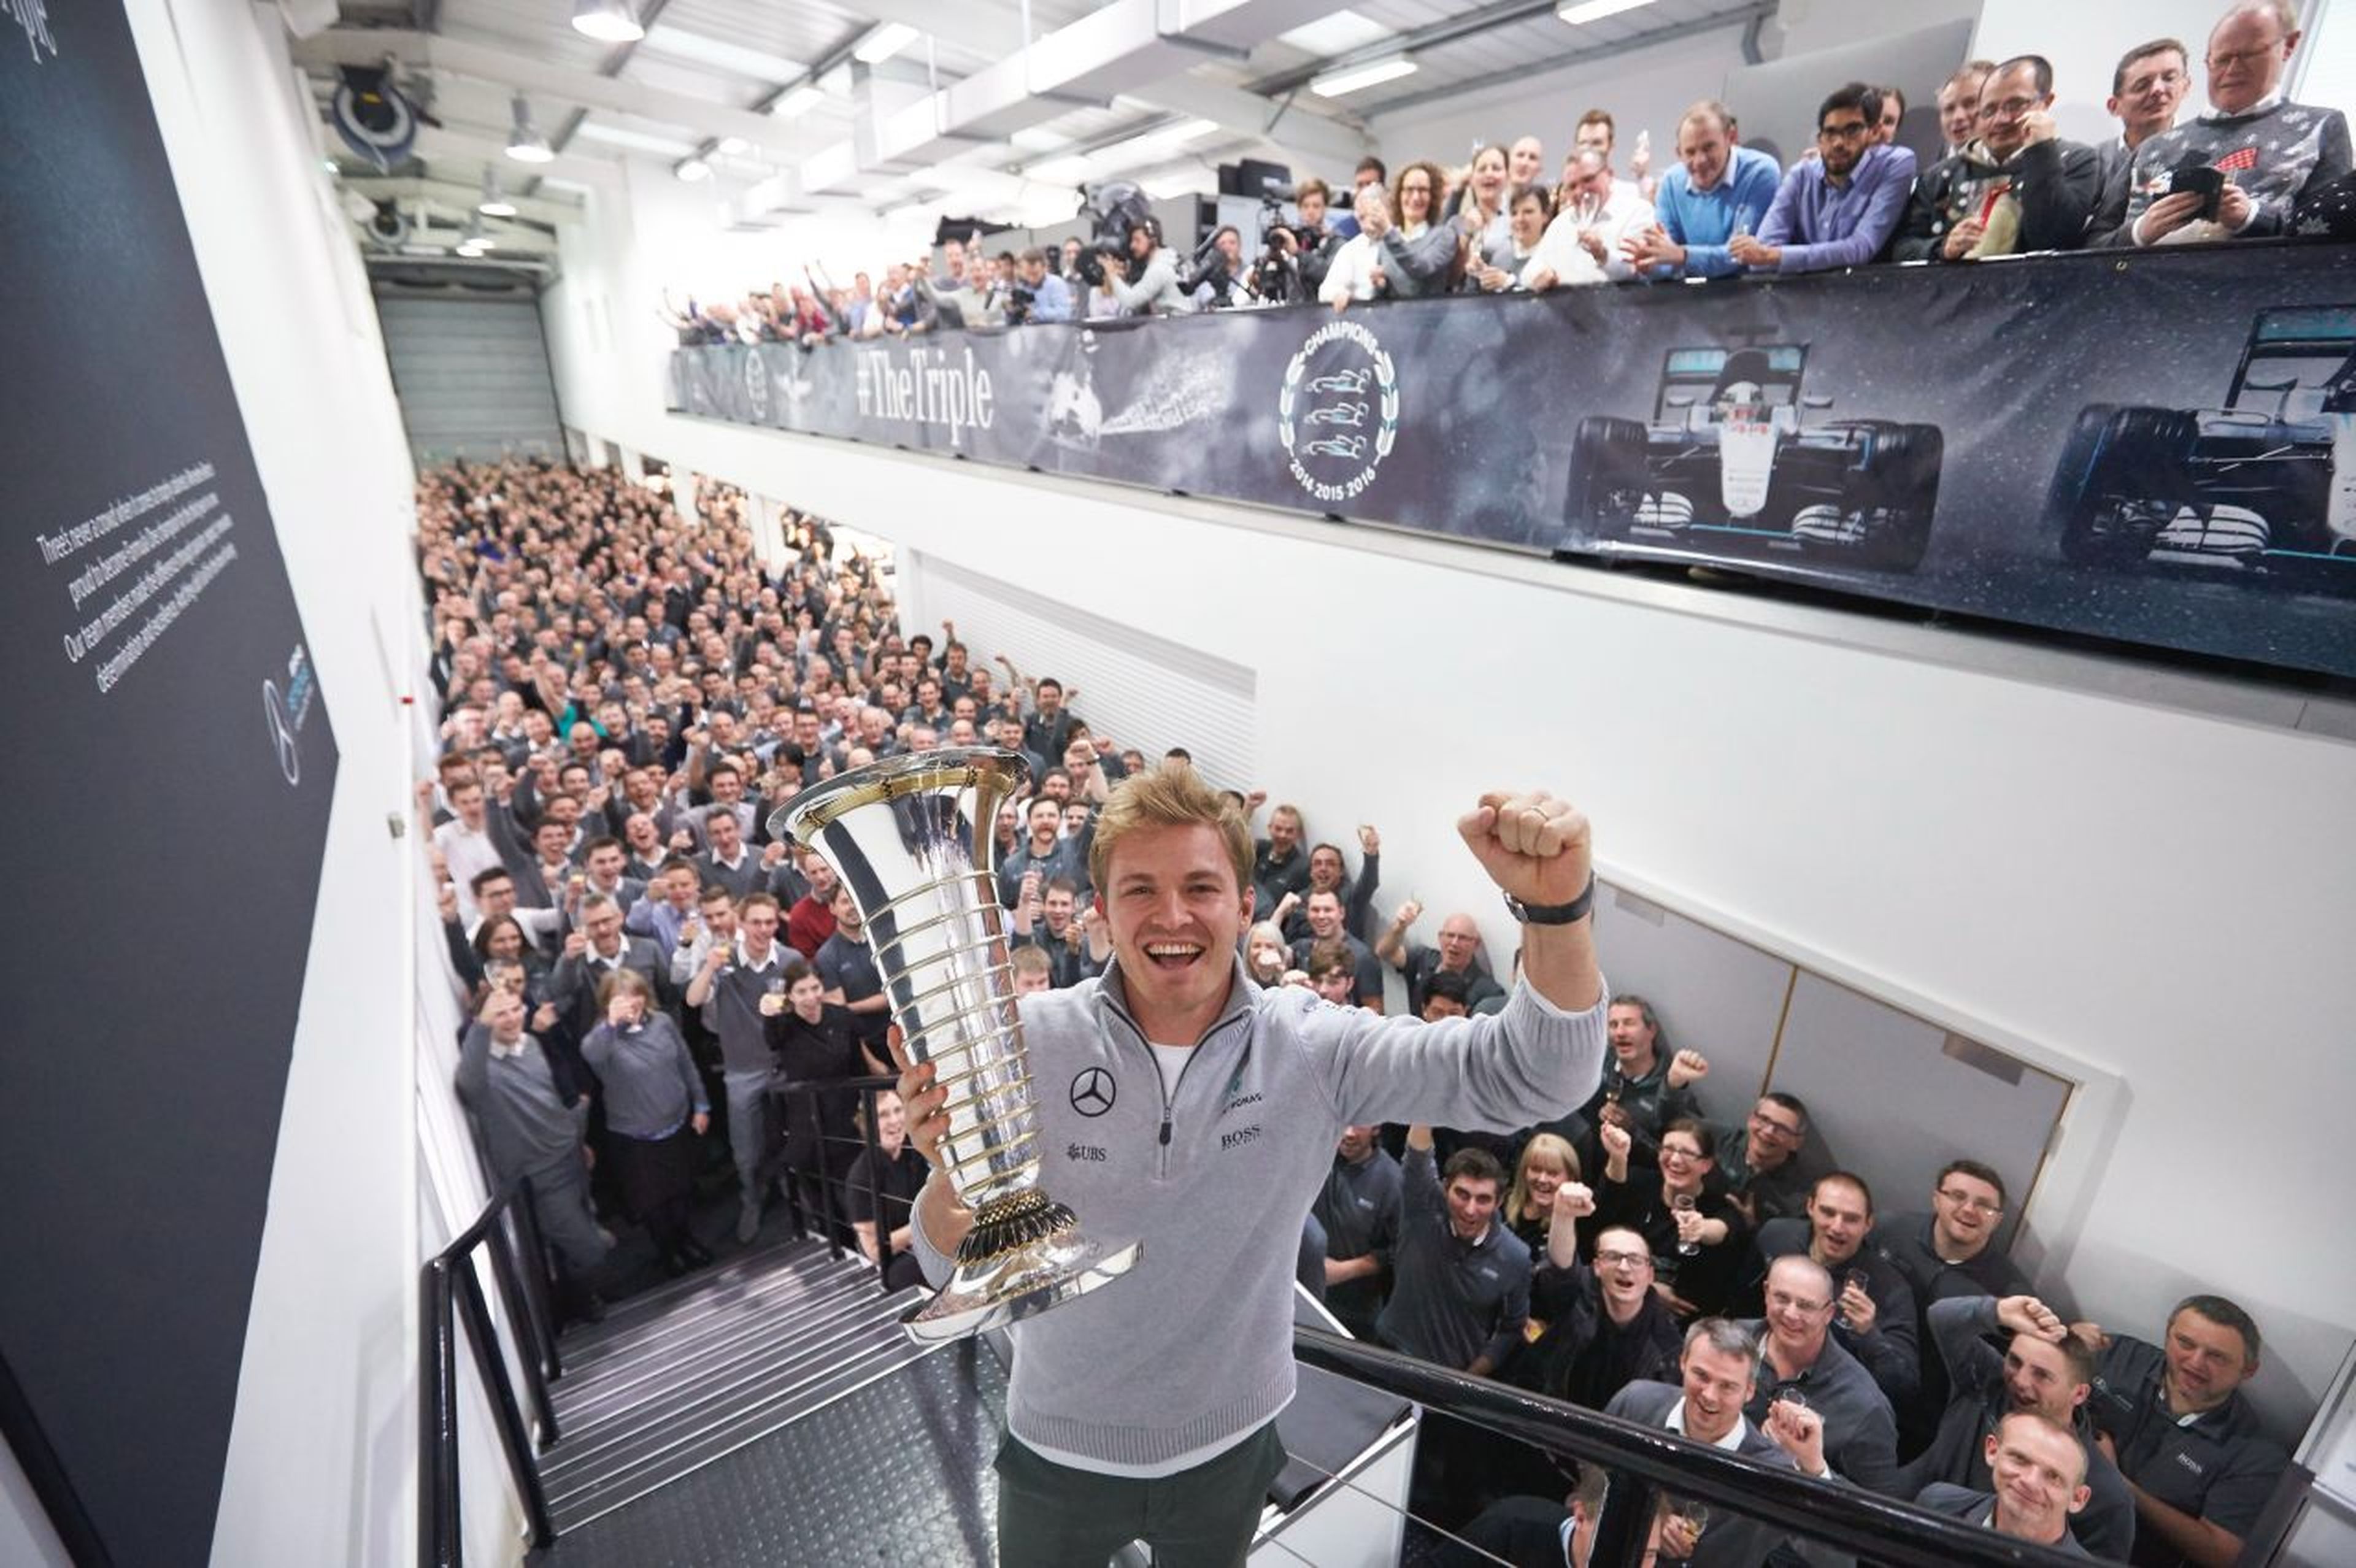 Nico Rosberg 2016